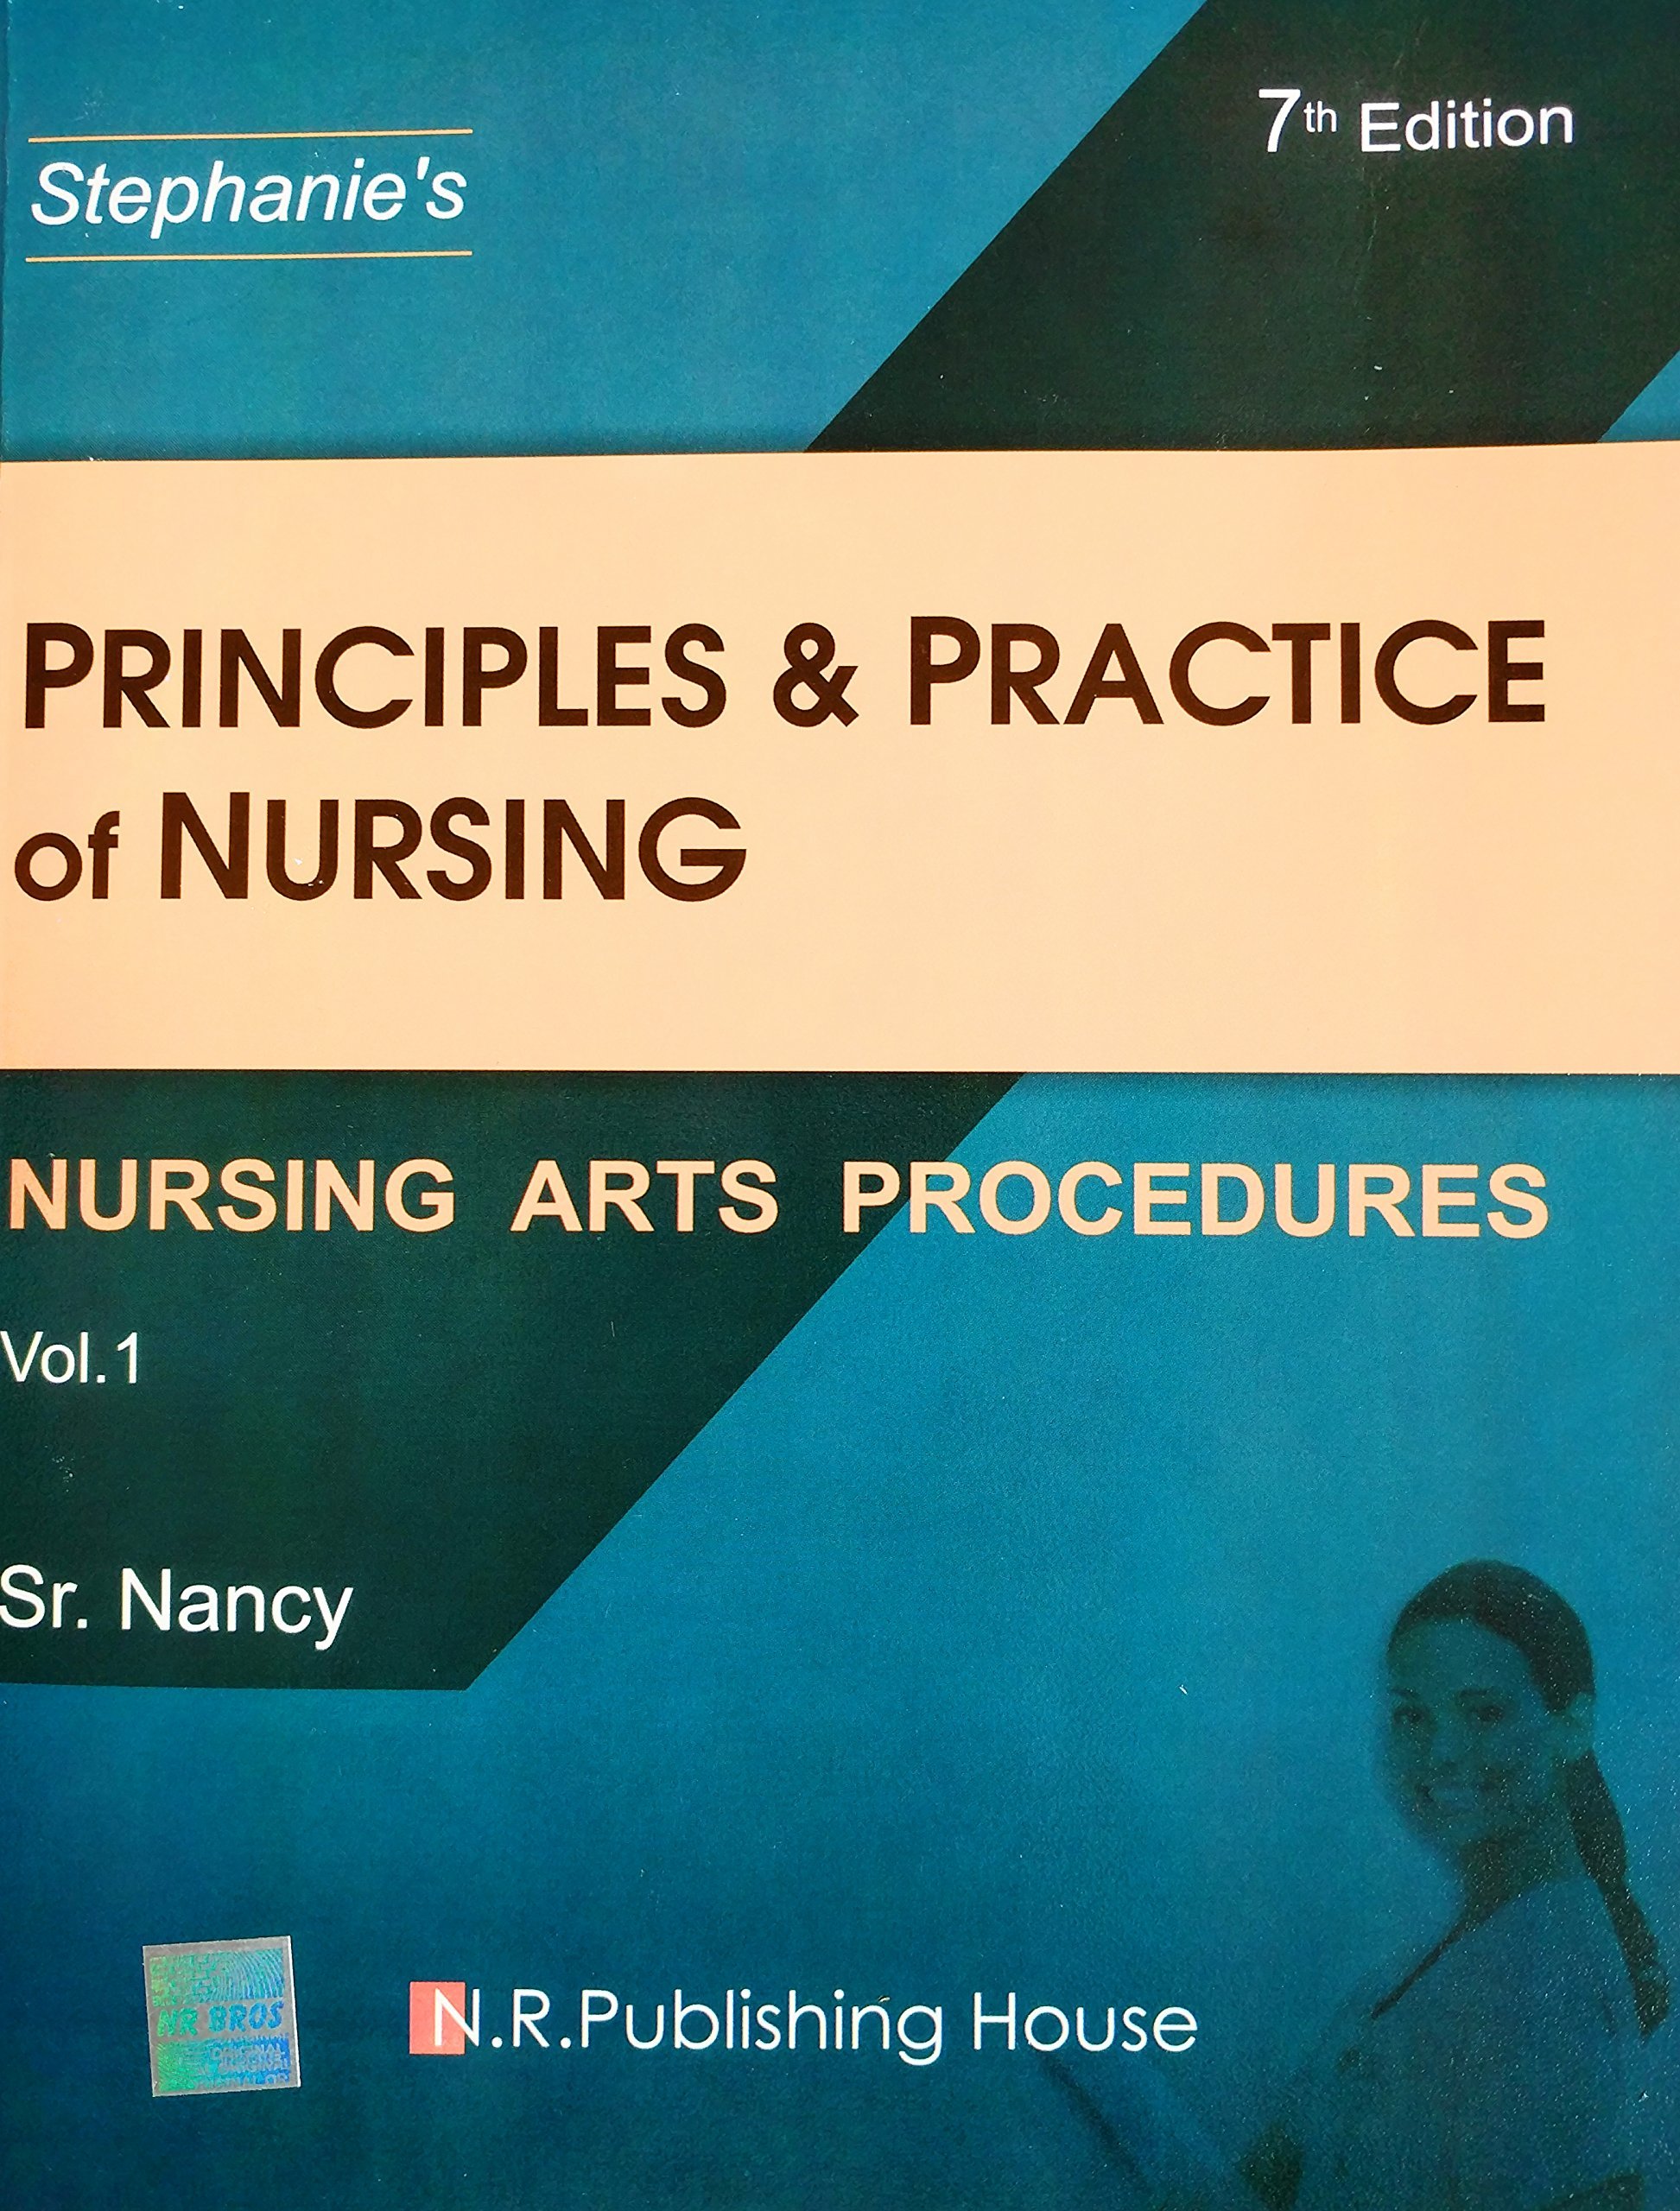 Stephanie'S Principle And Practice Of Nursing Vol1 by Sr. Nancy